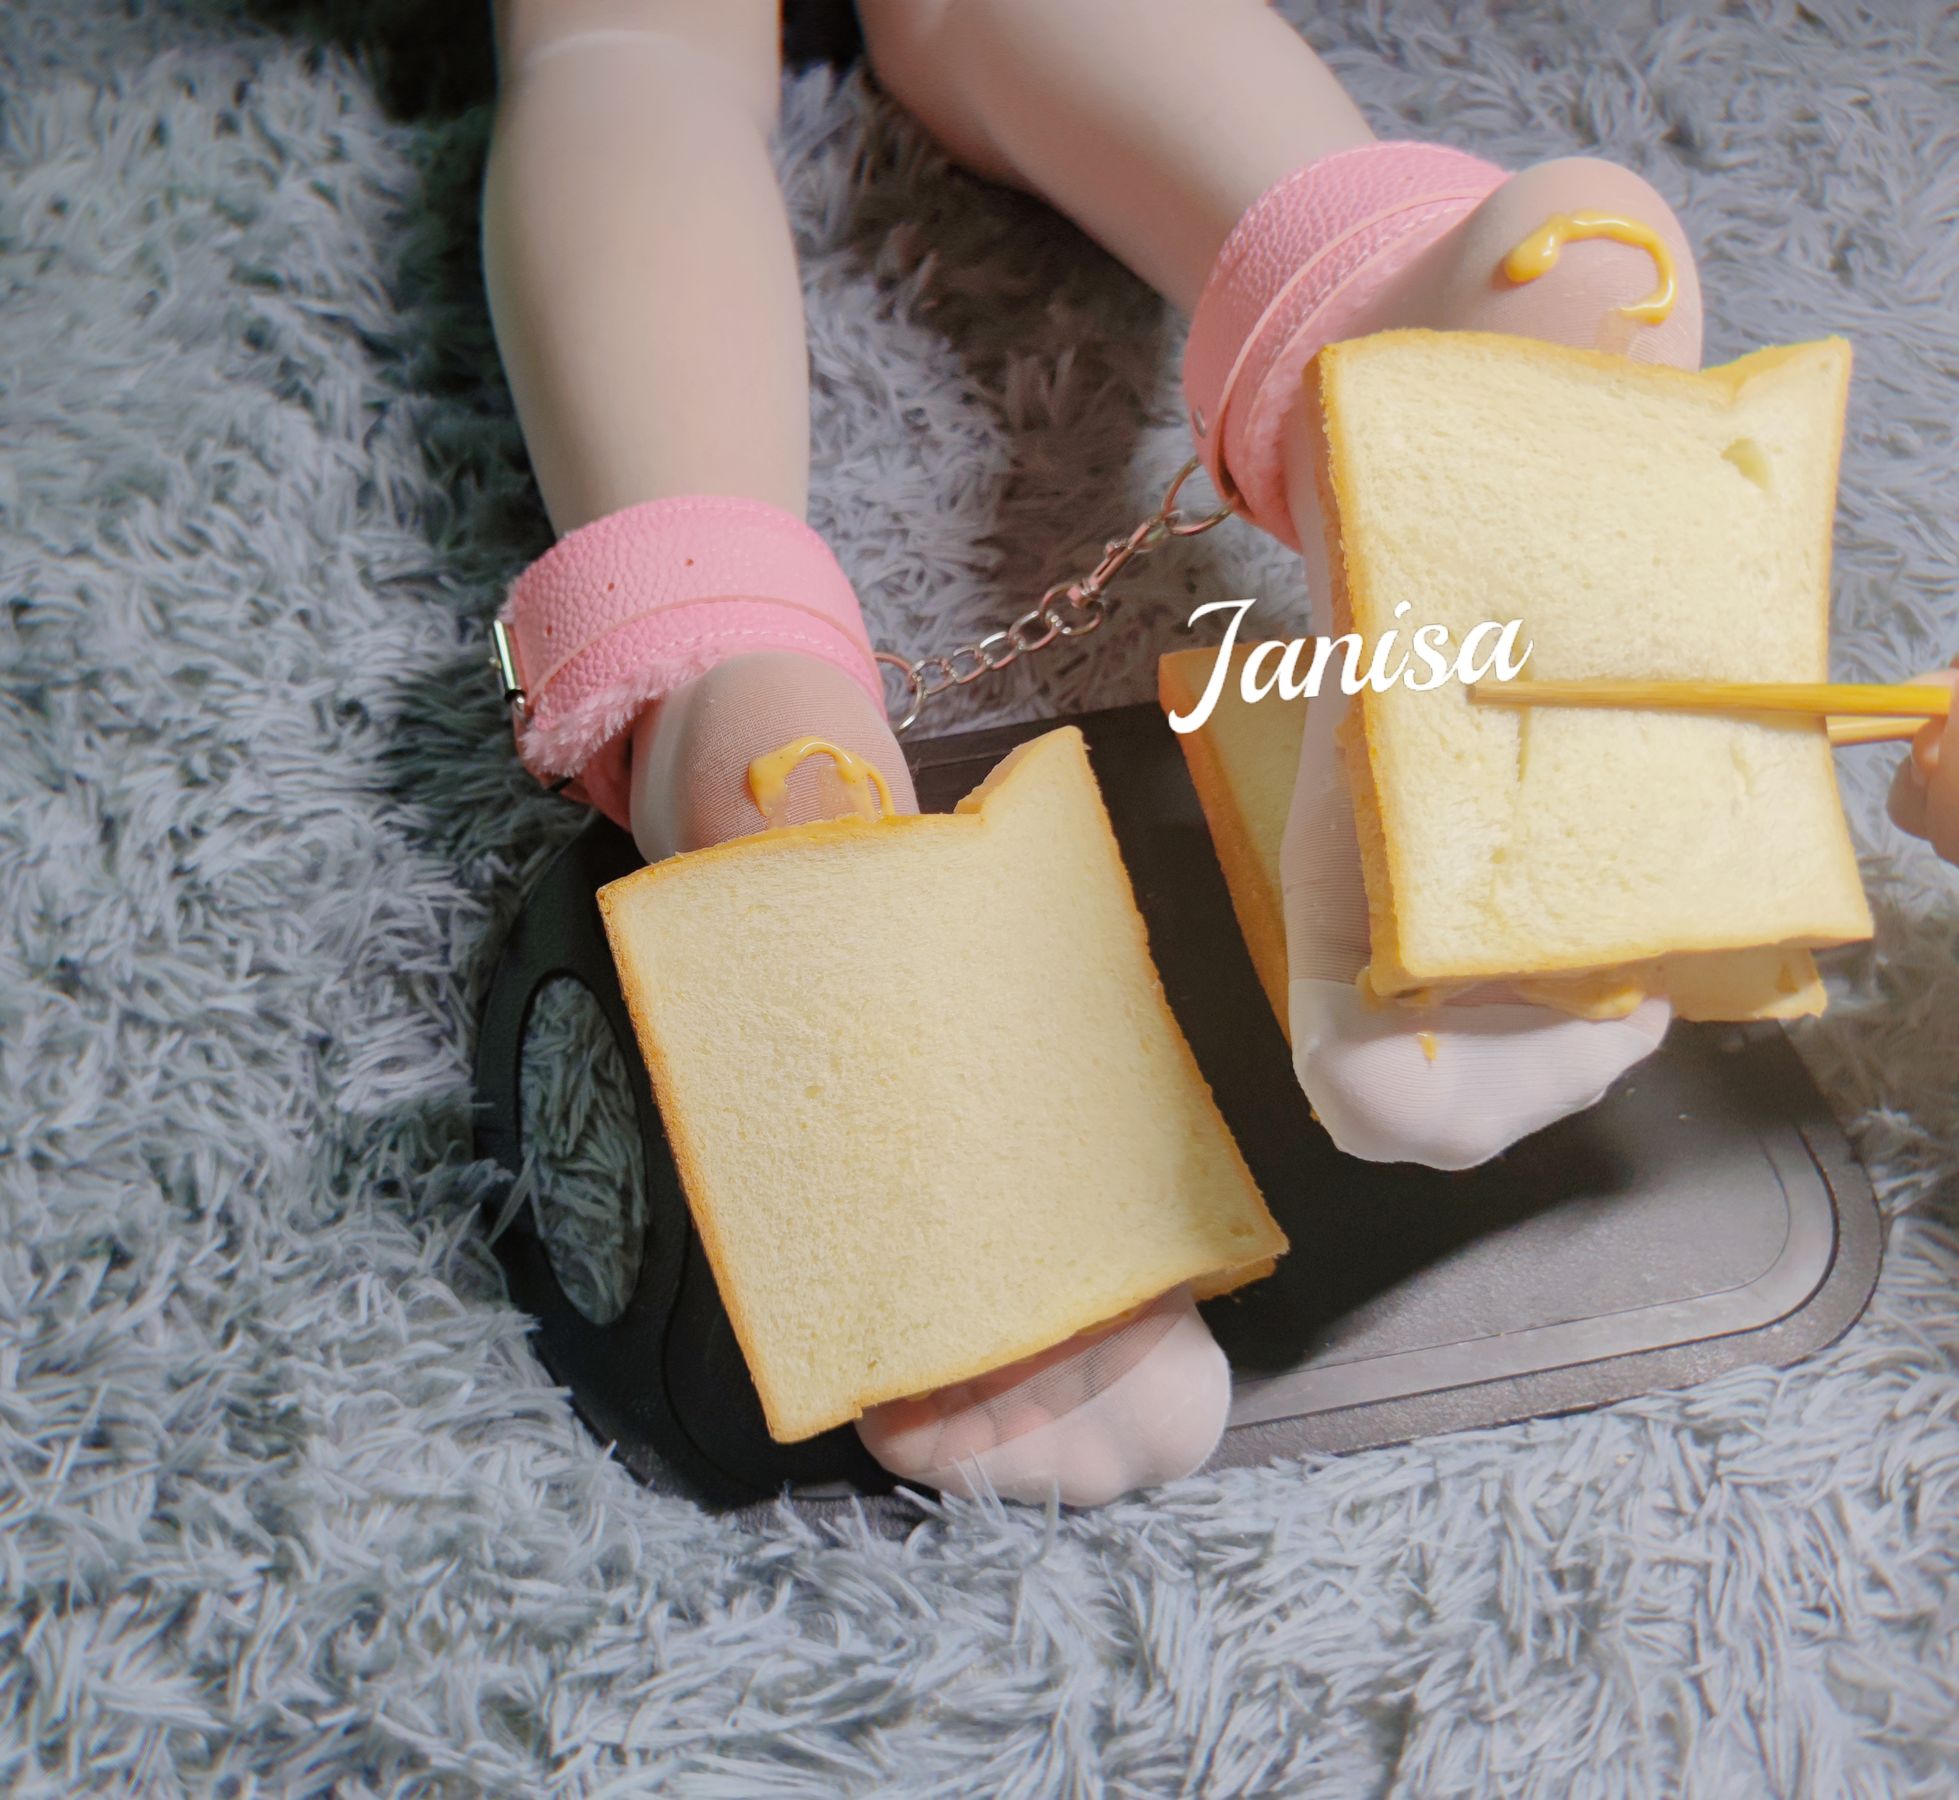 Janisa - 玉足三明治/(16P)